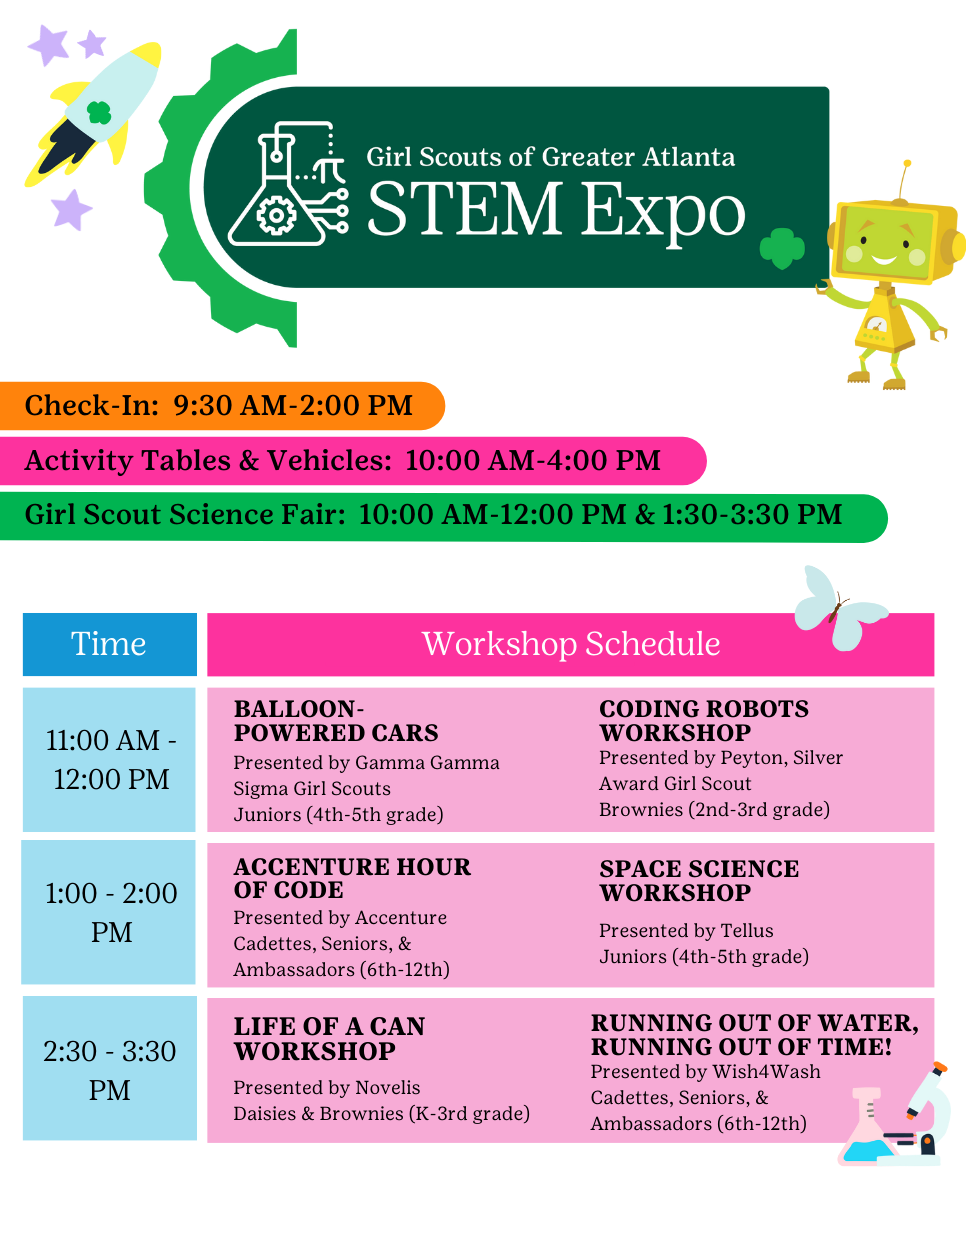 STEM Expo Event Schedule